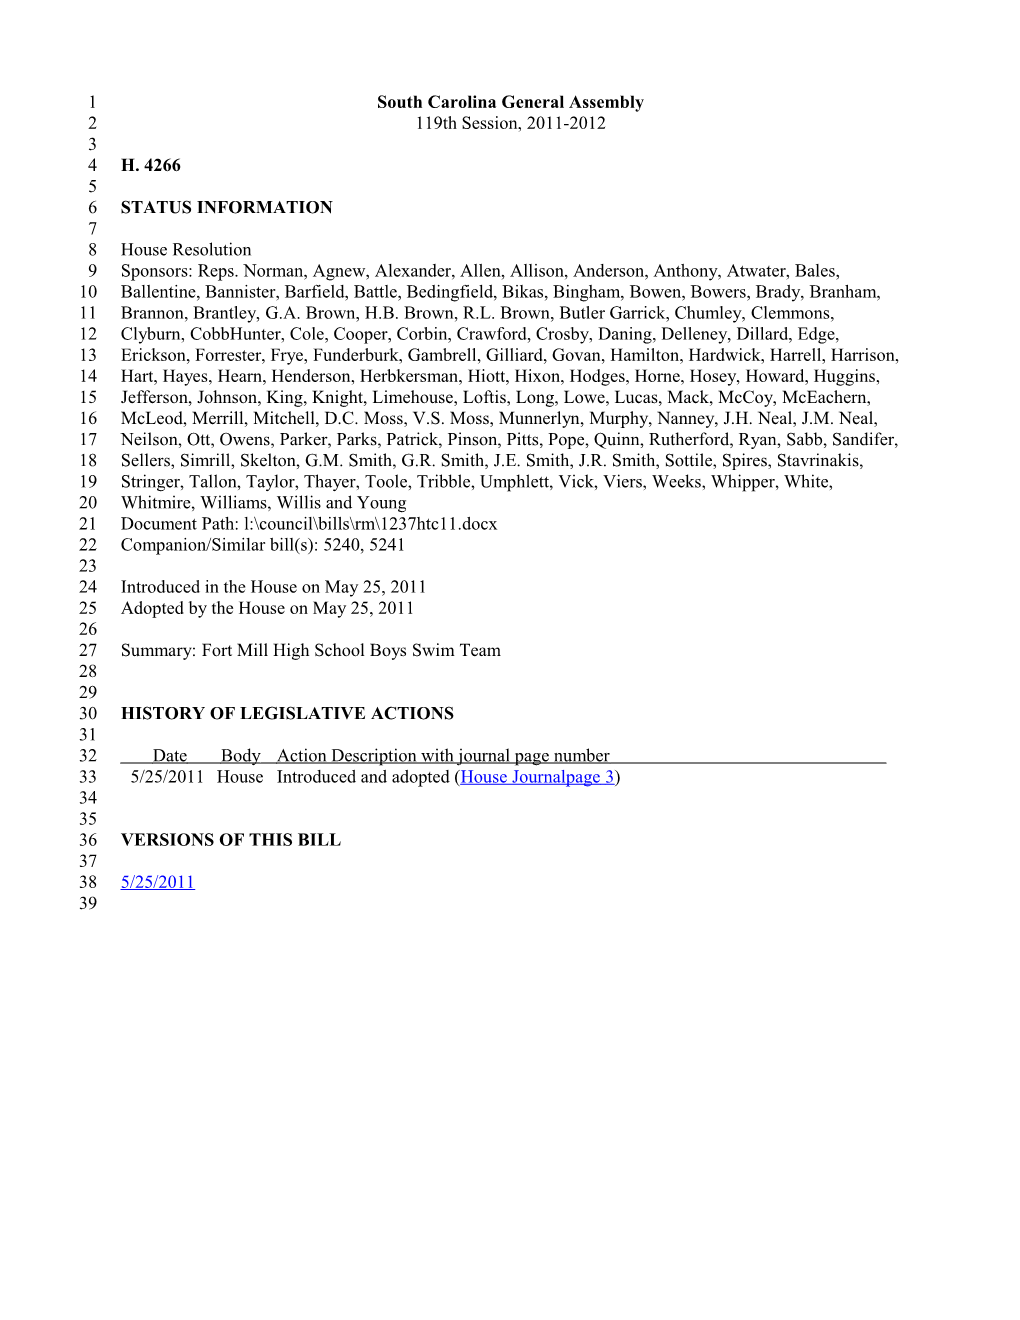 2011-2012 Bill 4266: Fort Mill High School Boys Swim Team - South Carolina Legislature Online